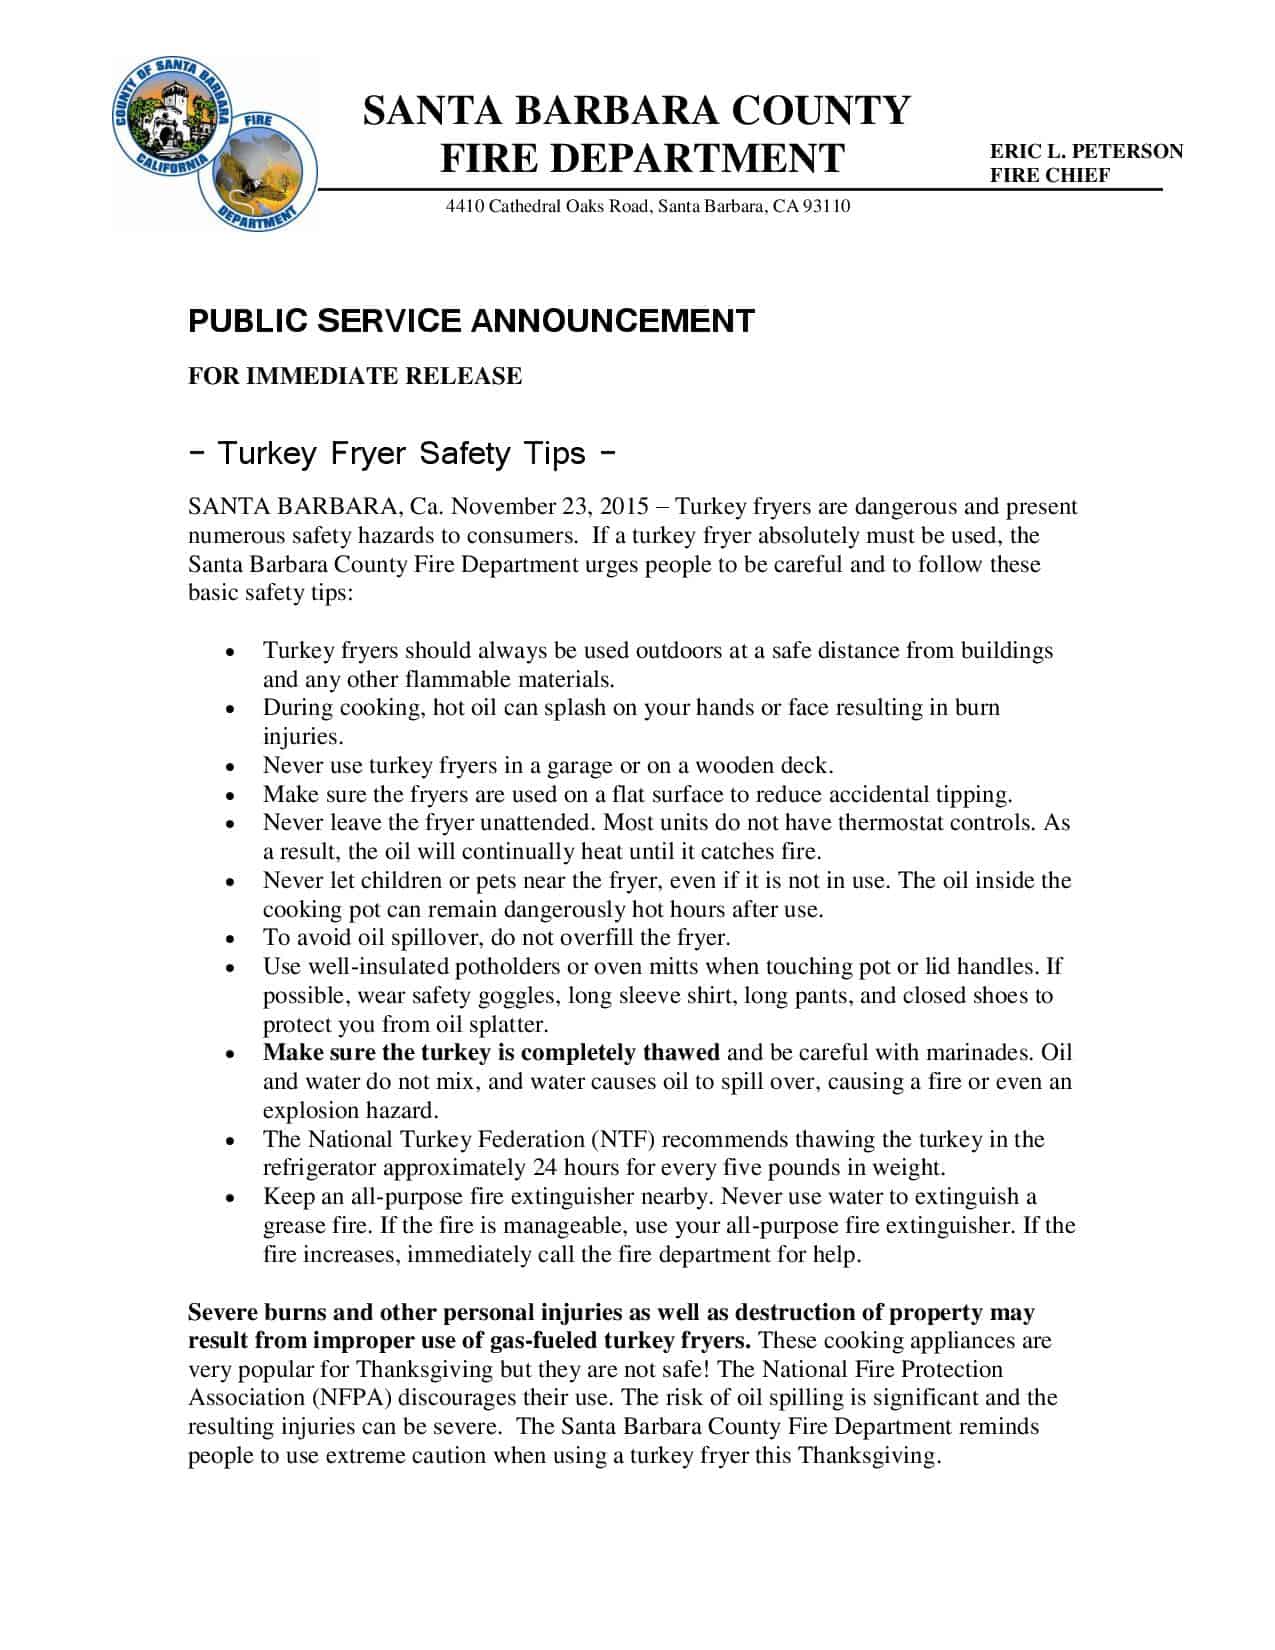 Turkey Fryer Safety Tips PSA